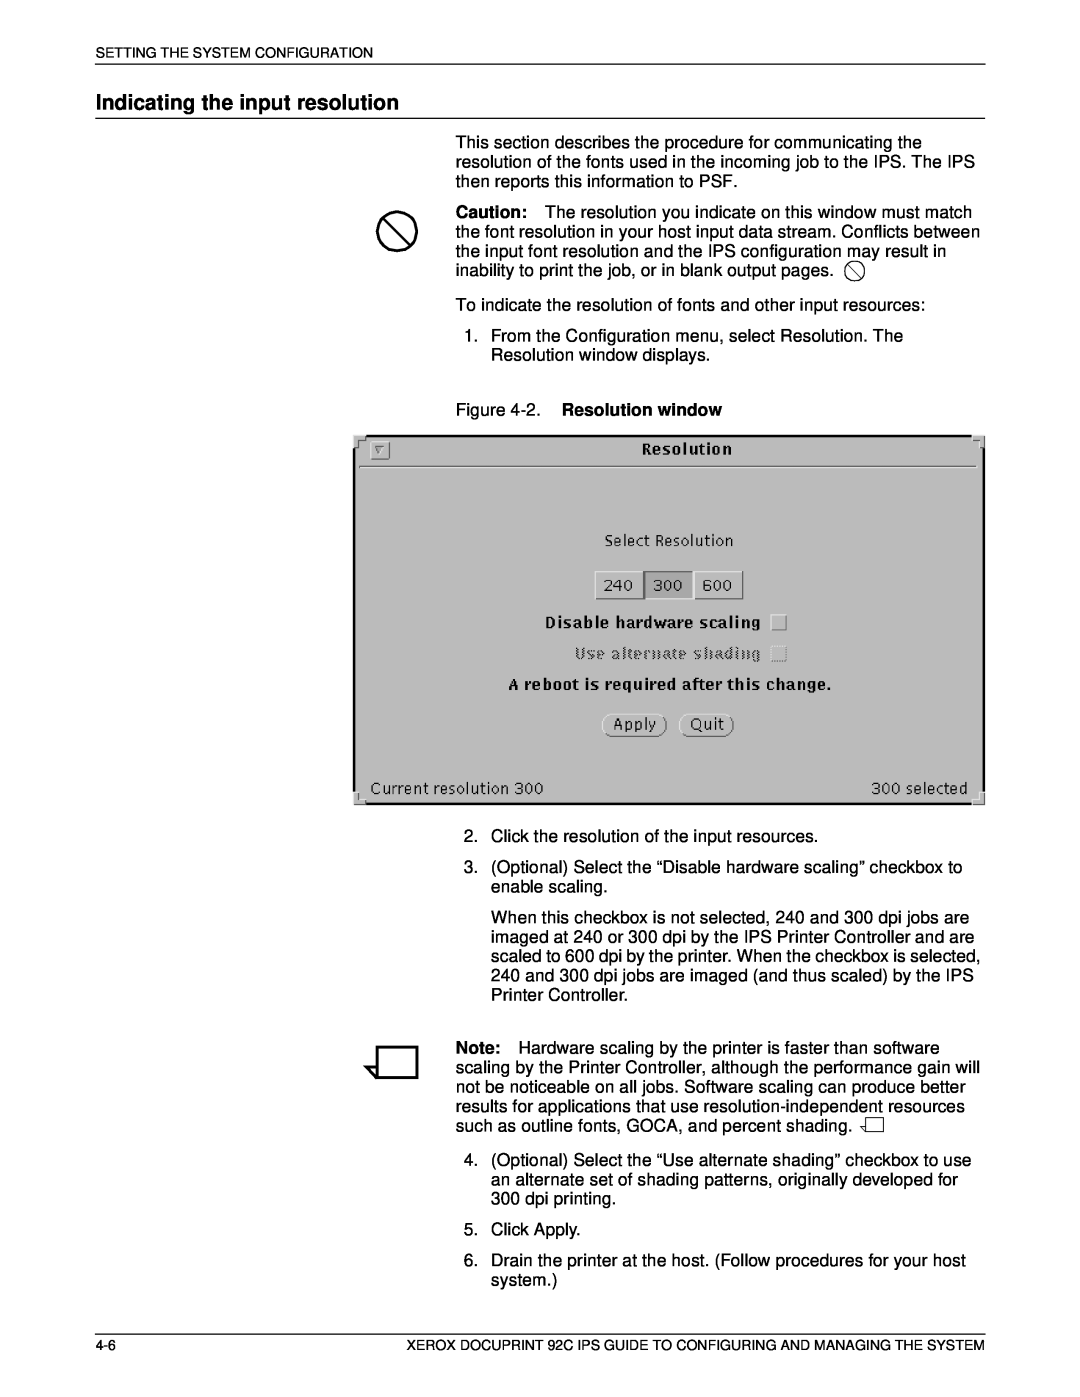 Xerox 92C IPS manual Indicating the input resolution, 2. Resolution window 